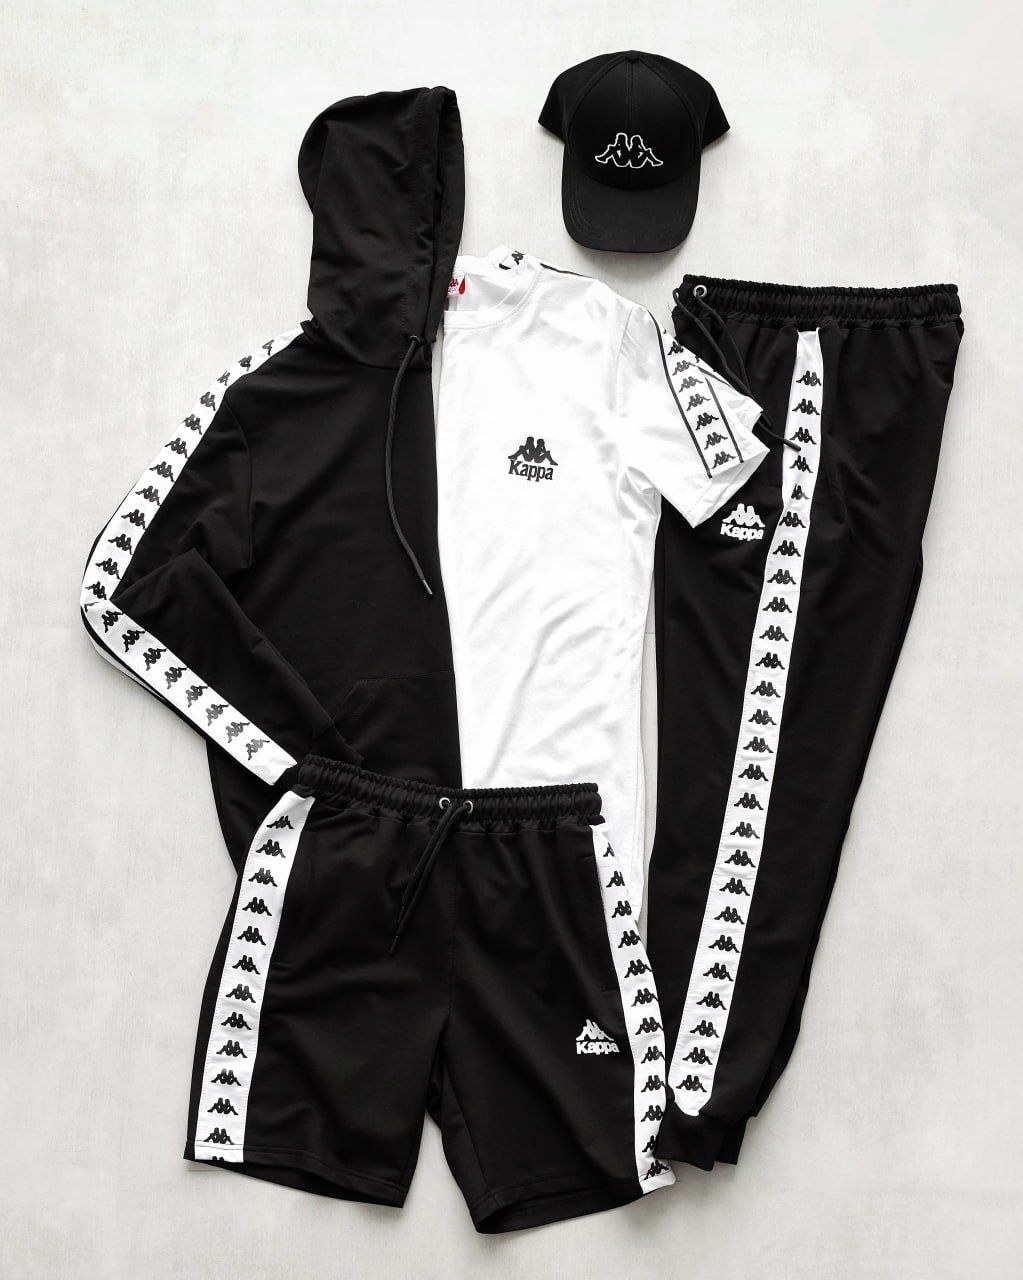 Комплект мужской Kappa спортивный костюм,жилетка,футболка,кепка,весна!